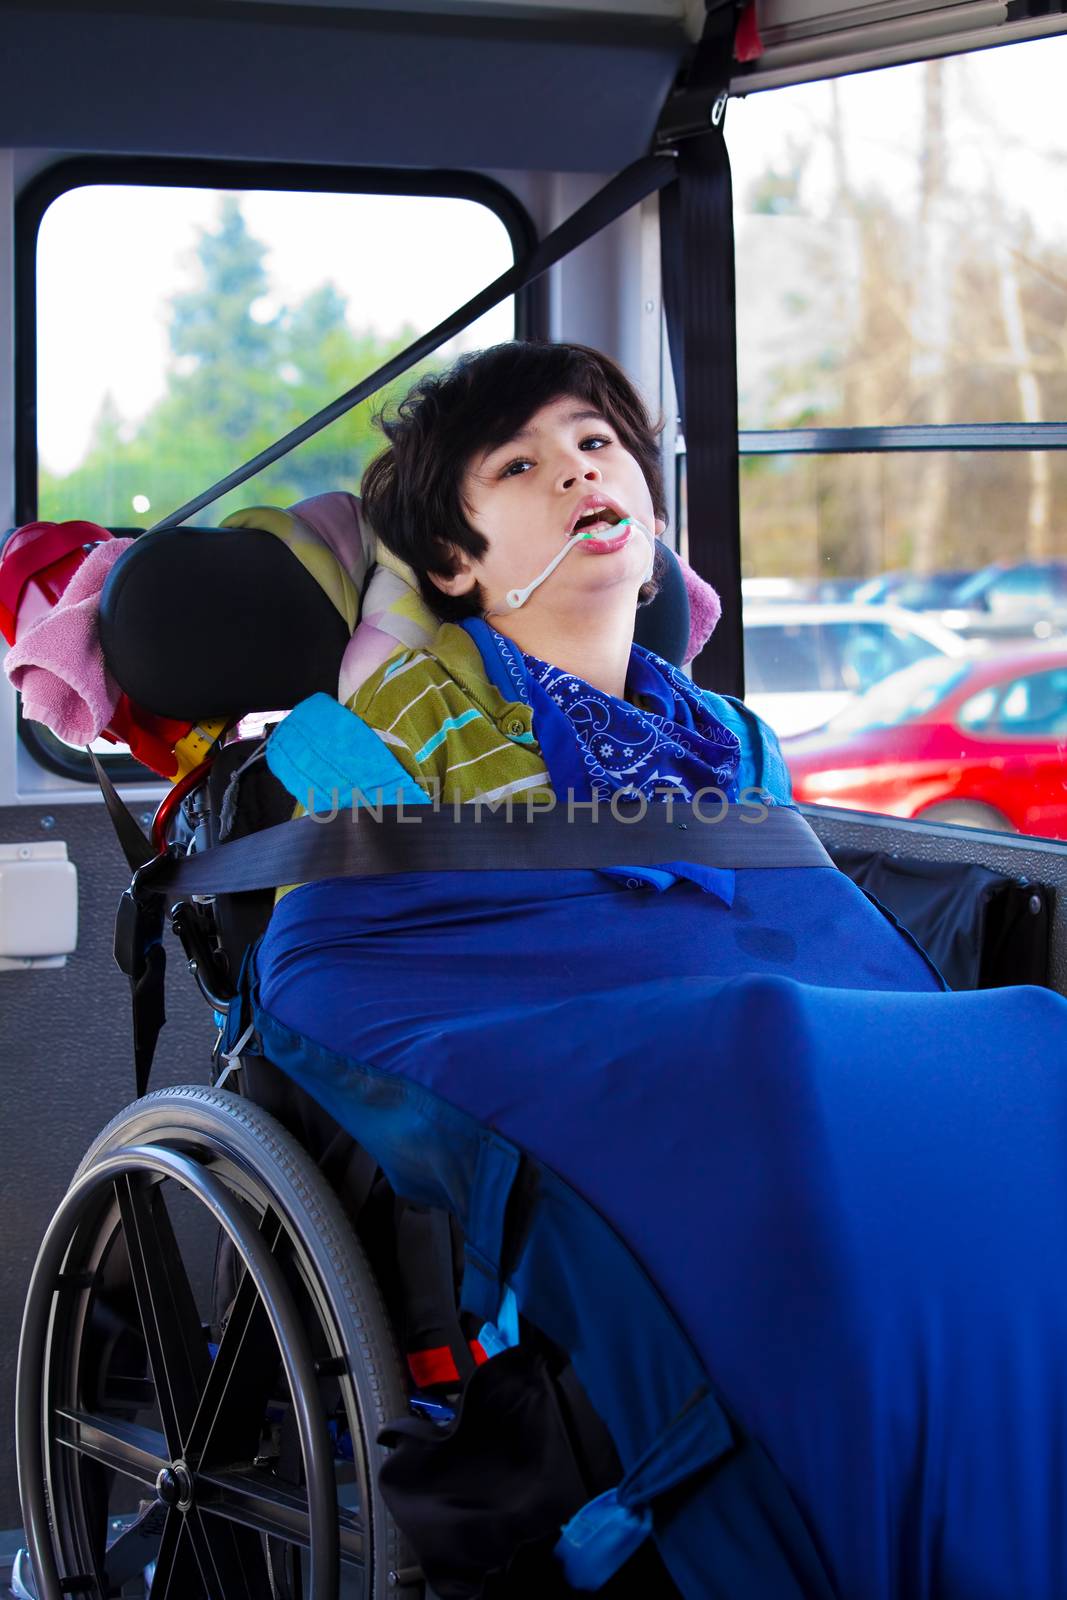 Disabled eight year old boy in wheelchair buckled on school bus by jarenwicklund